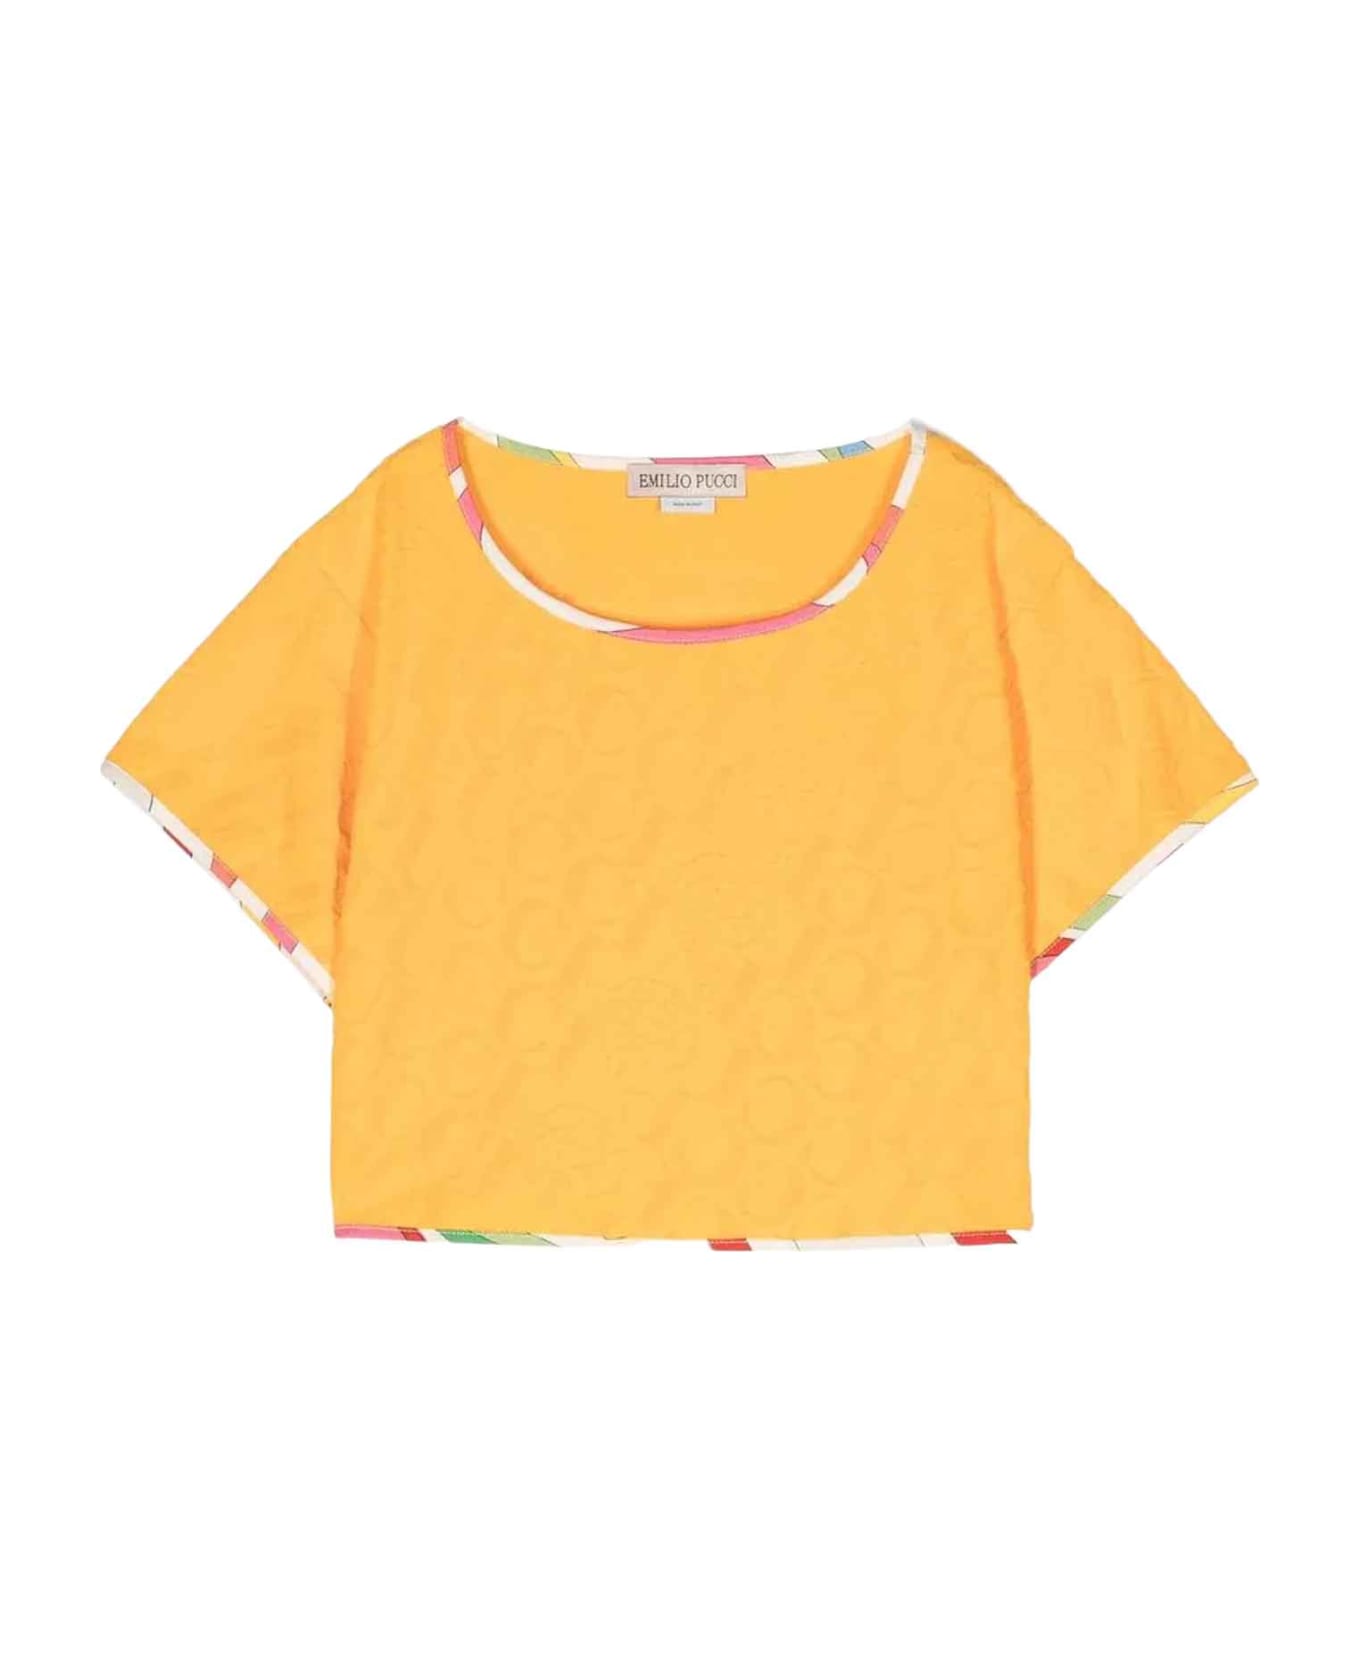 Pucci Yellow T-shirt Girl - Giallo